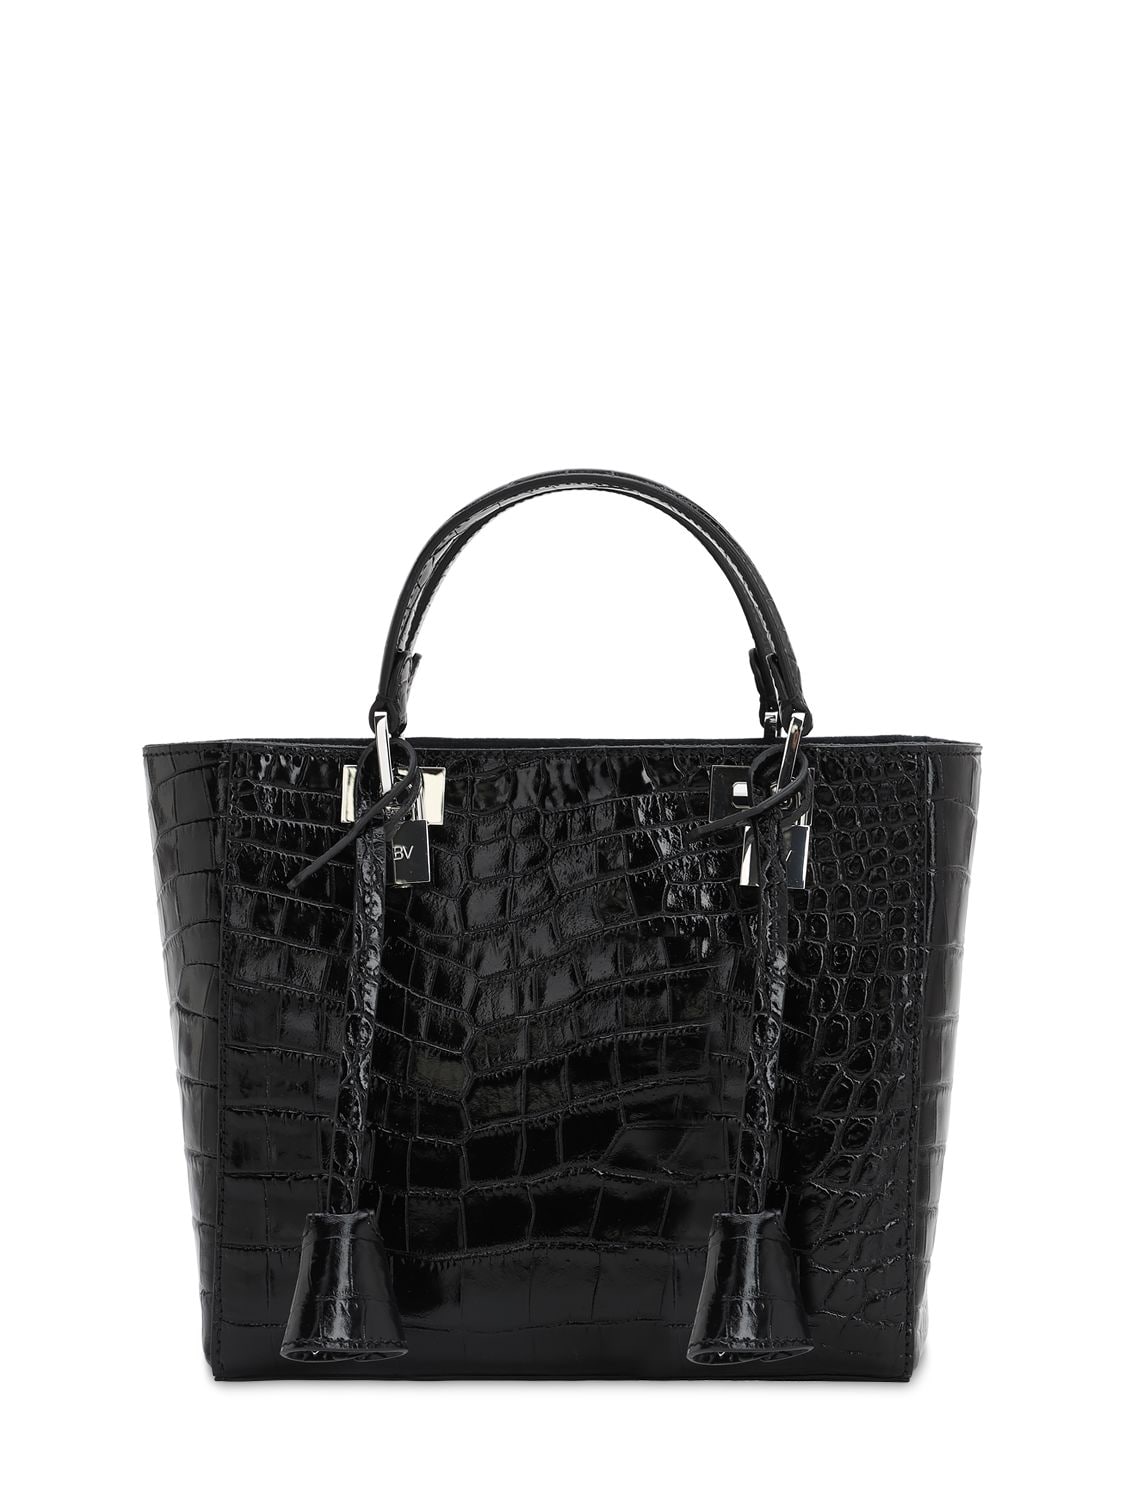 Giambattista Valli Croc Embossed Leather Top Handle Bag In Black